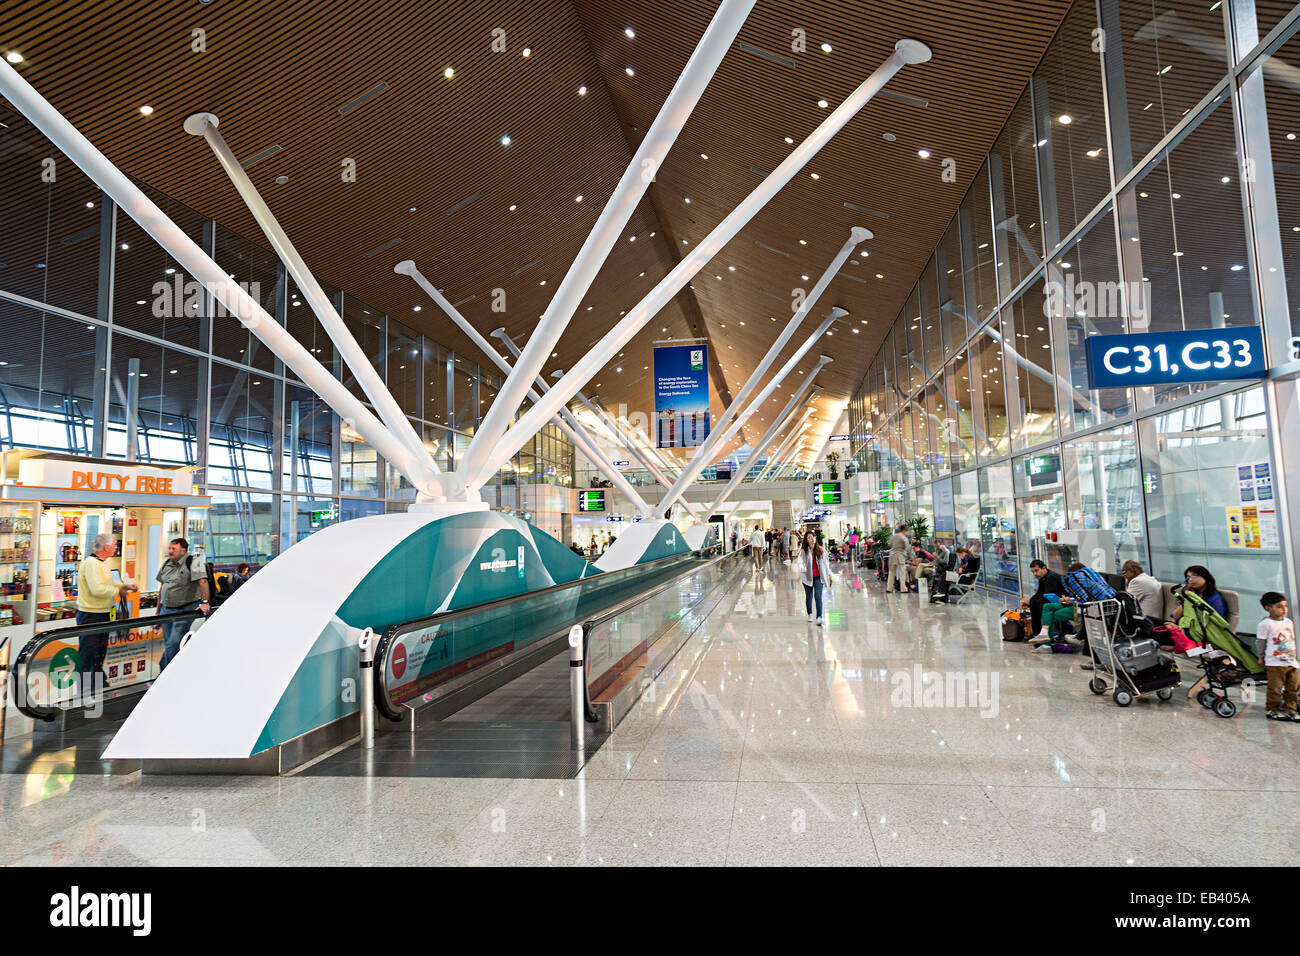 Conveyor belt walkways in airport, Kuala Lumpur, Malaysia Stock Photo